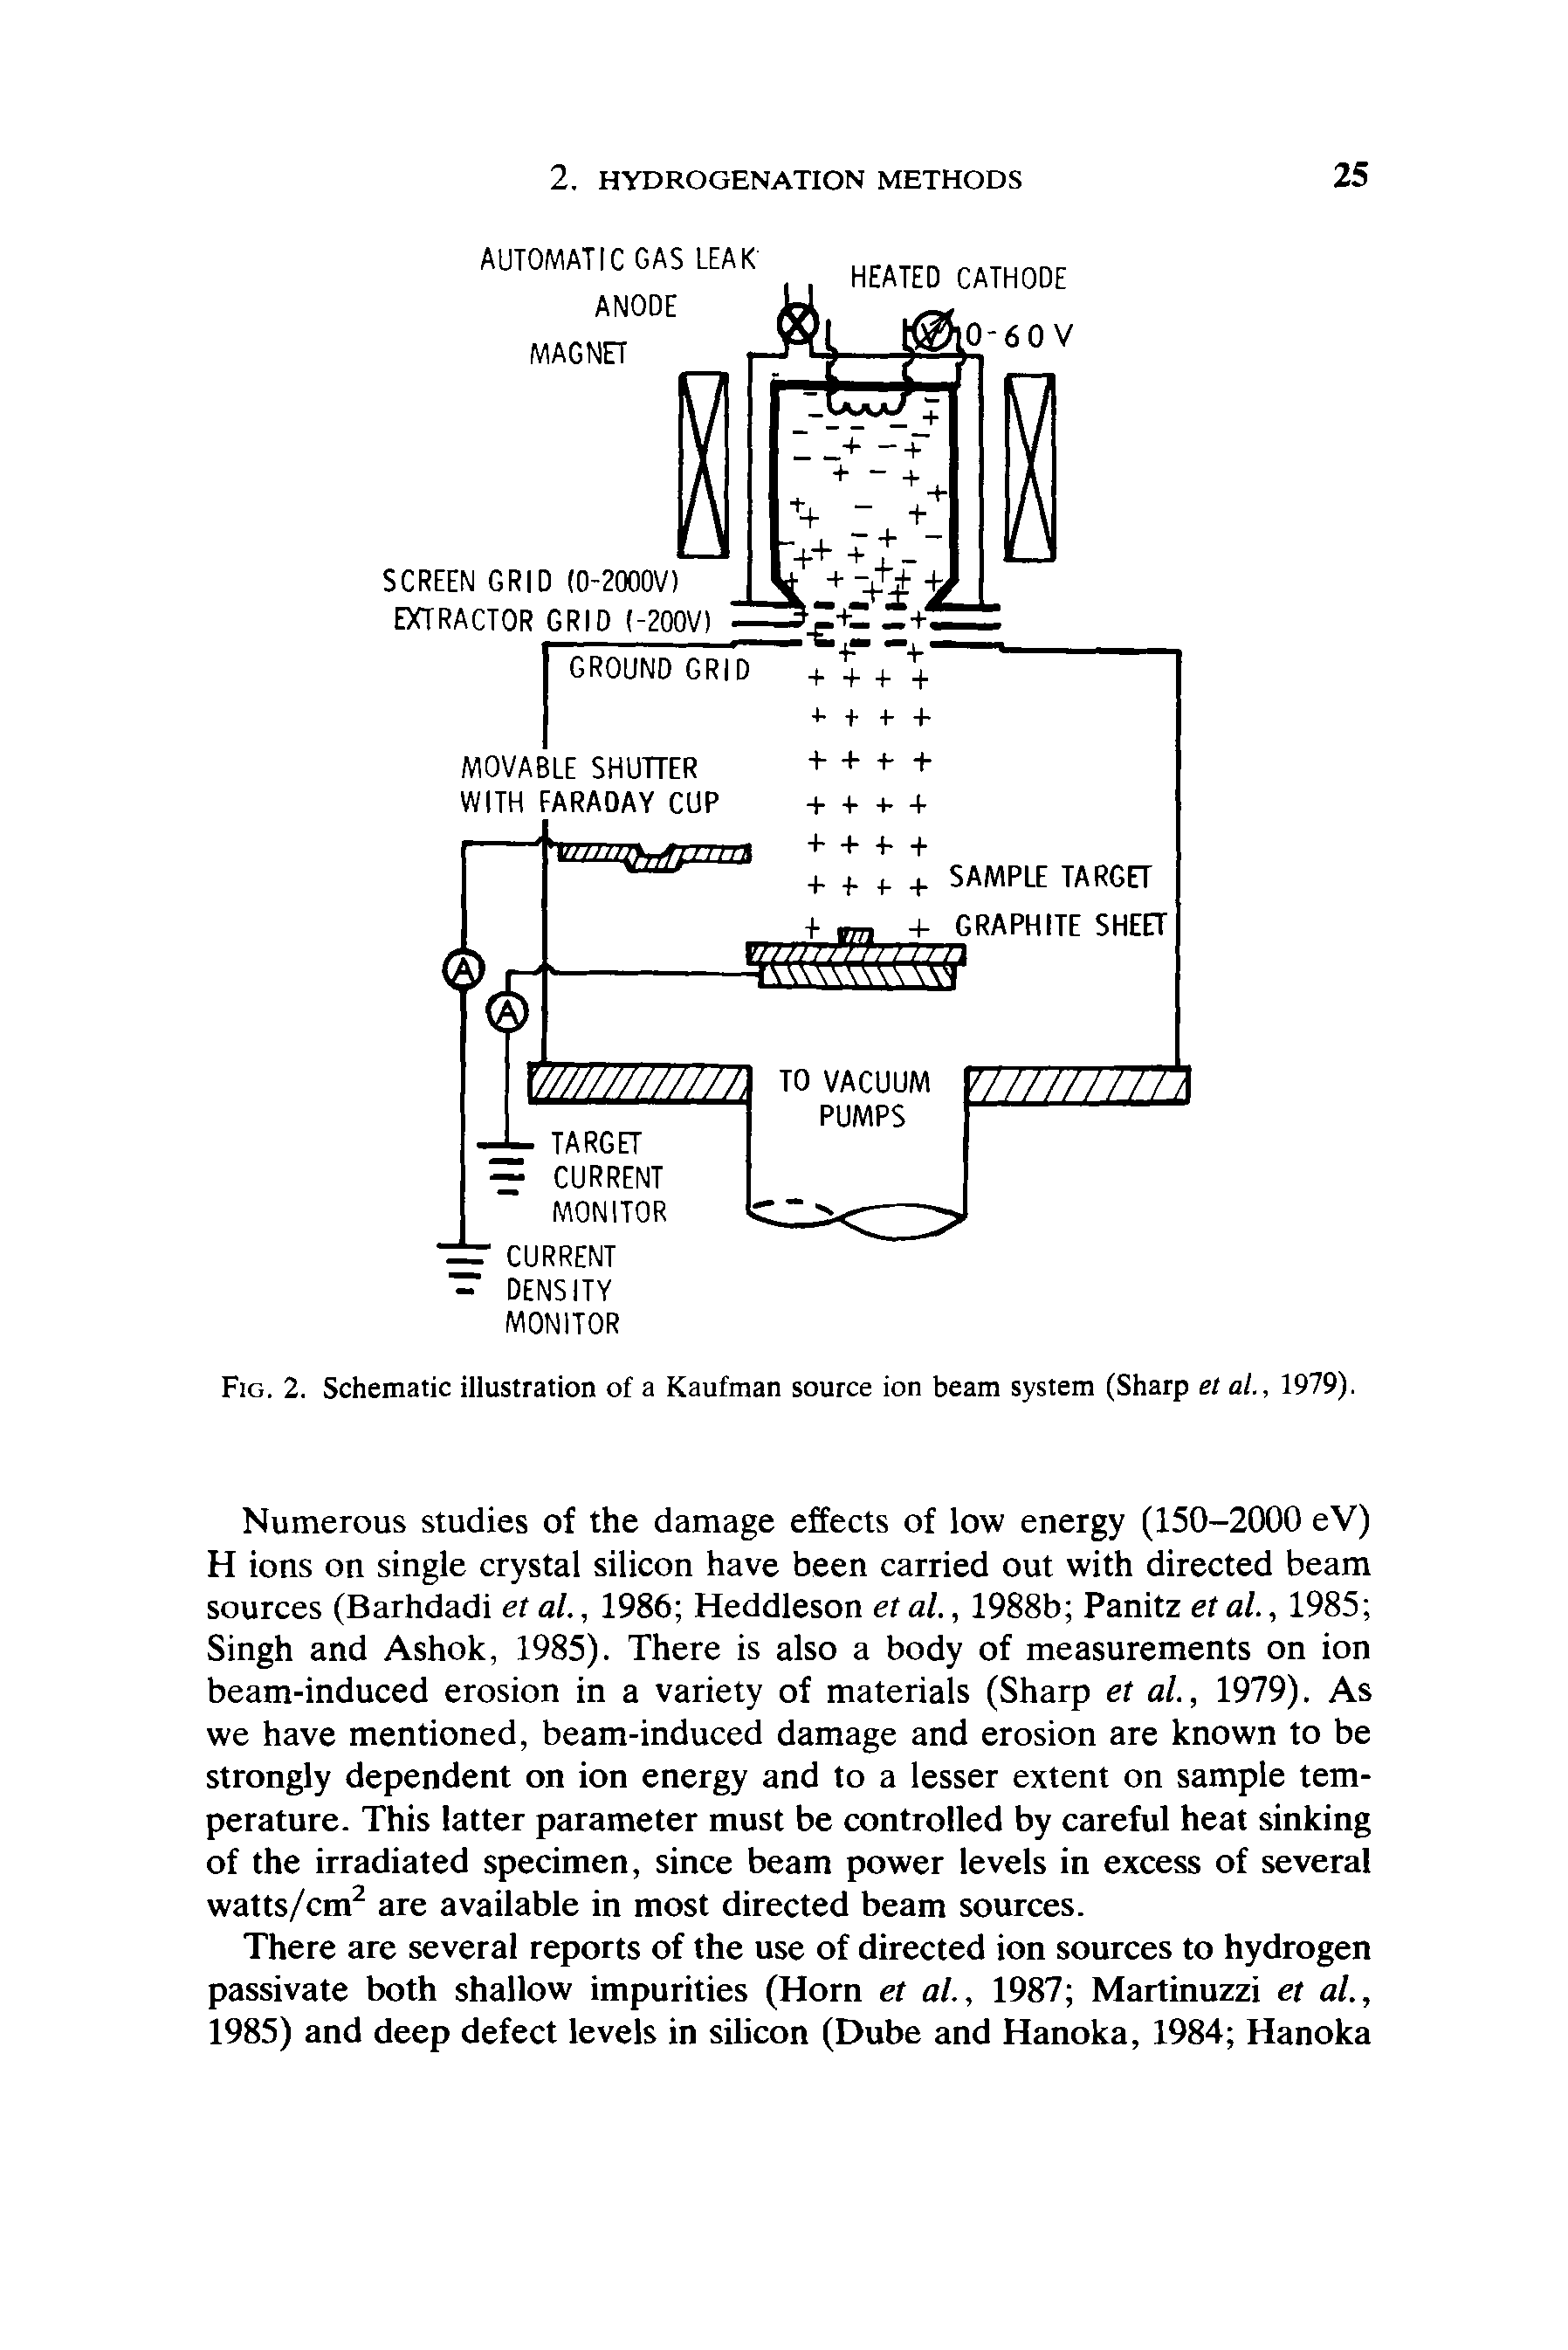 Fig. 2. Schematic illustration of a Kaufman source ion beam system (Sharp et al., 1979).